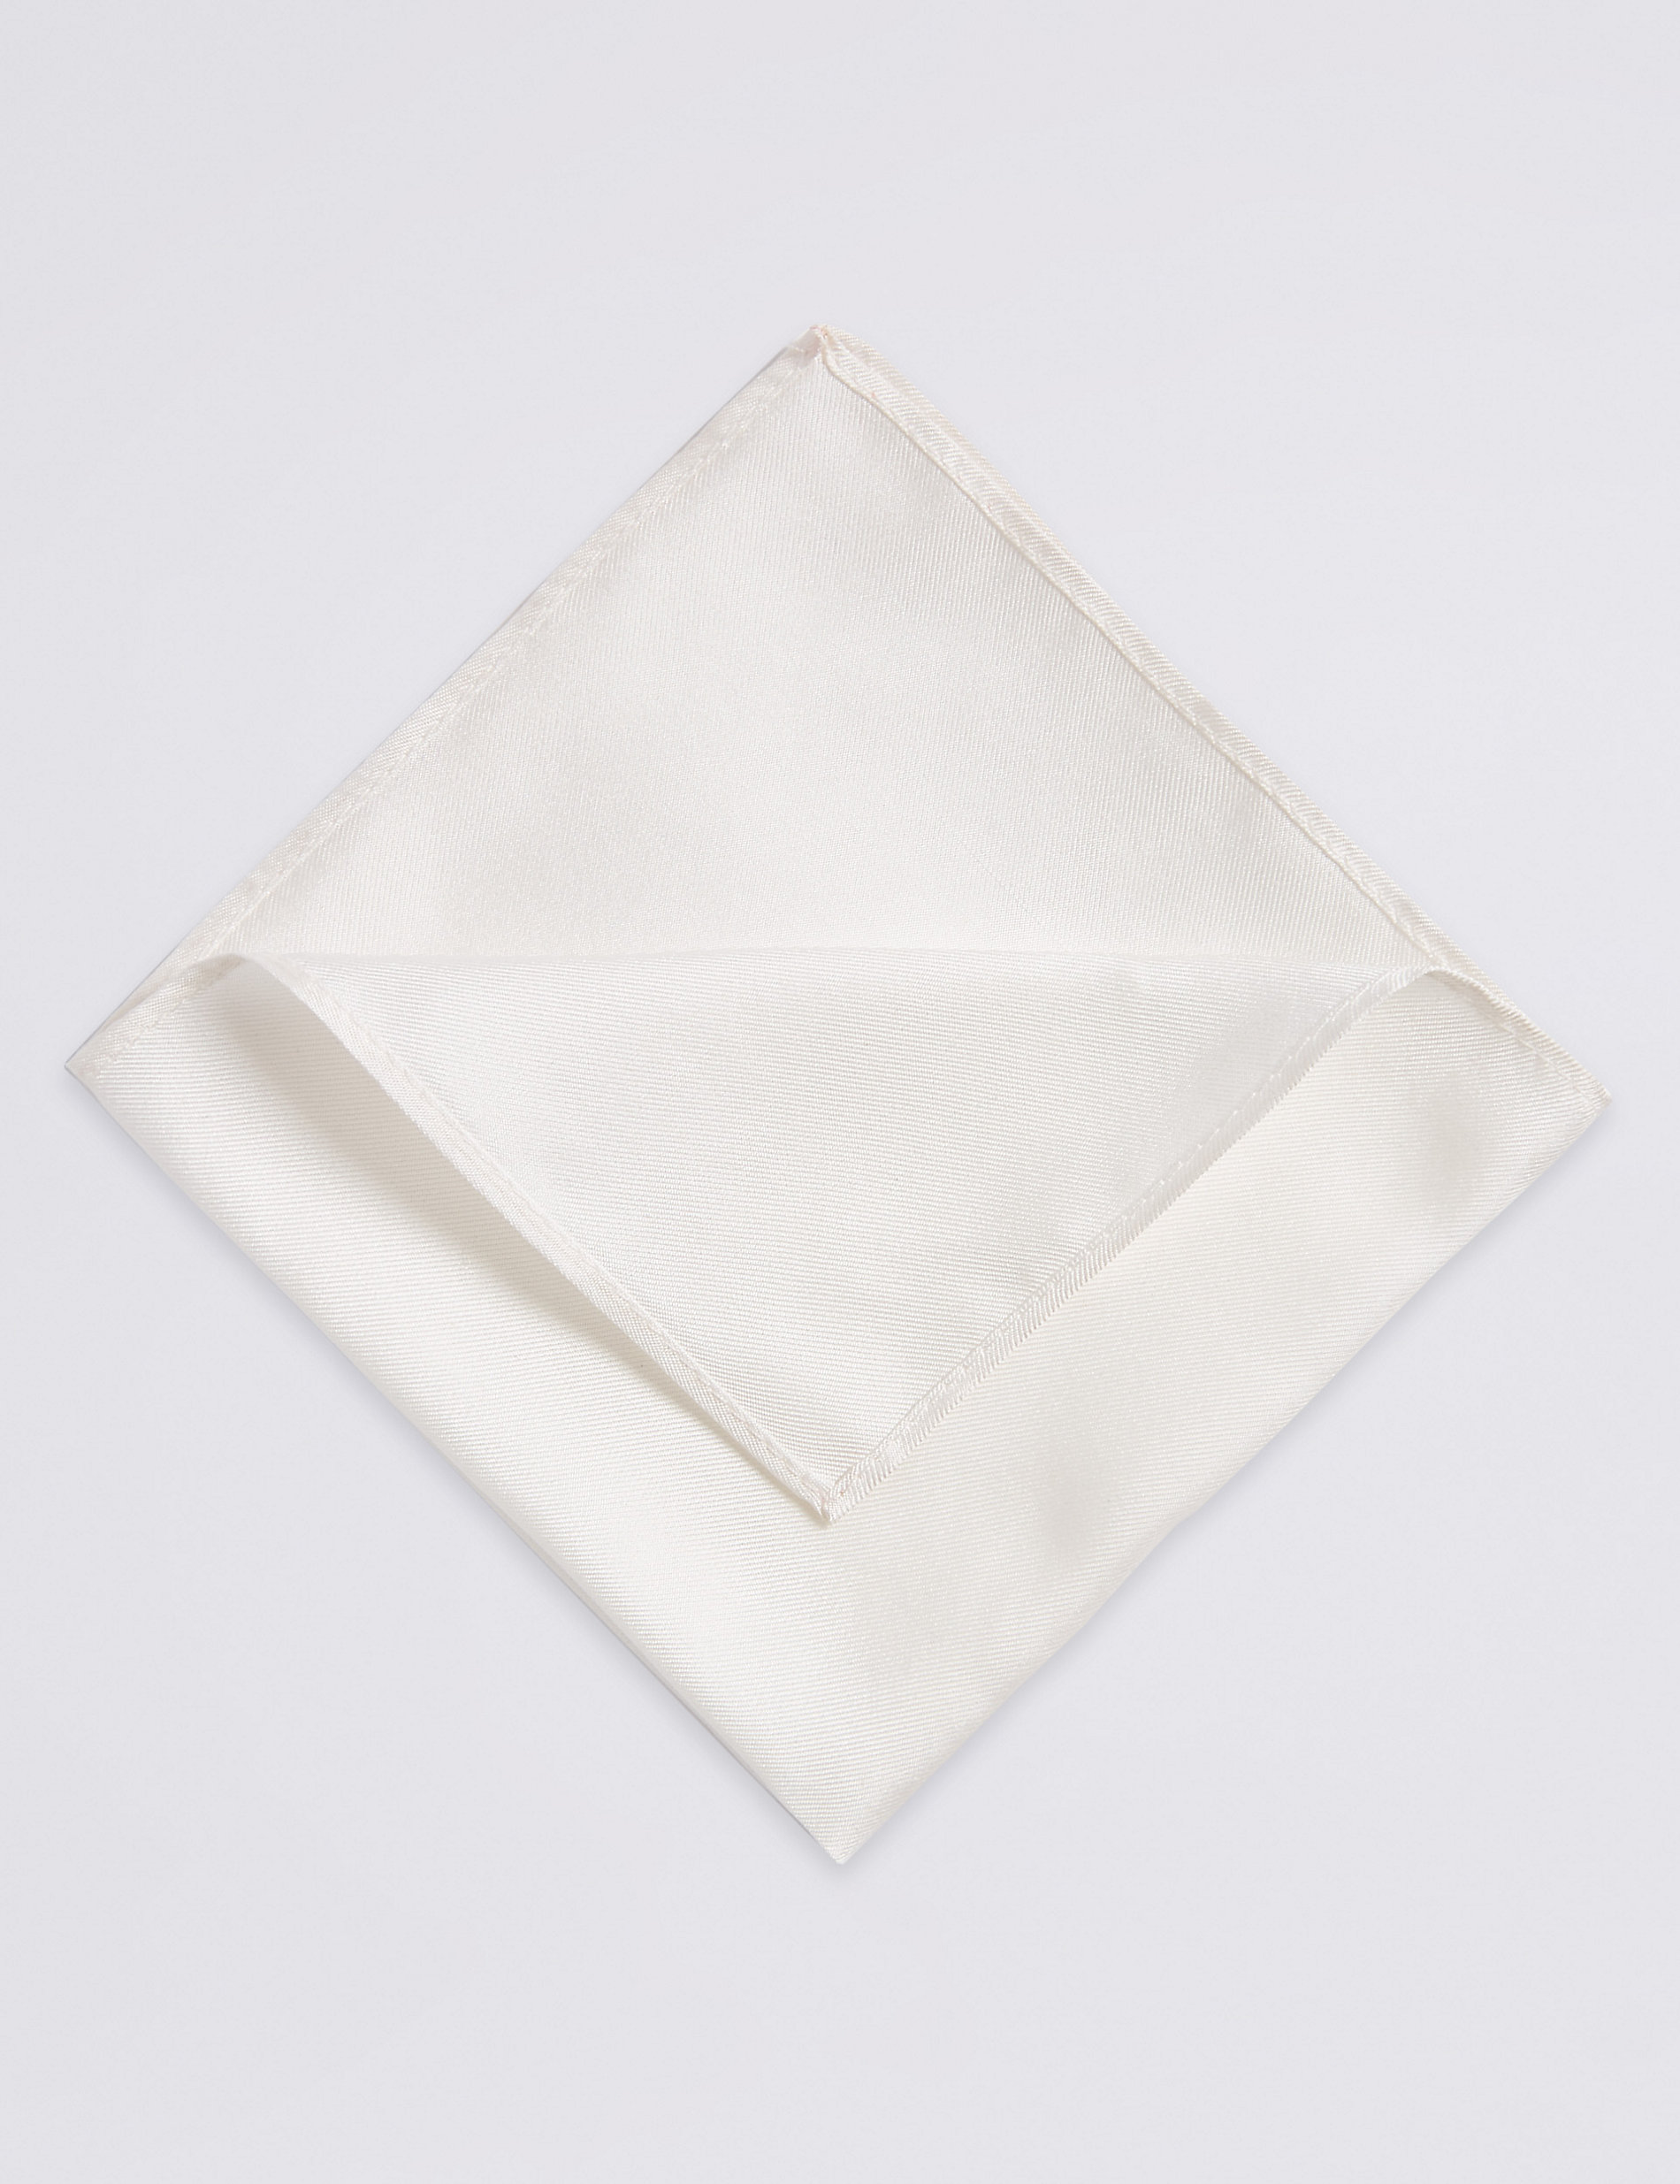 M&S Silver Pure Silk Paisley Pocket Square Handkerchief BNWT 